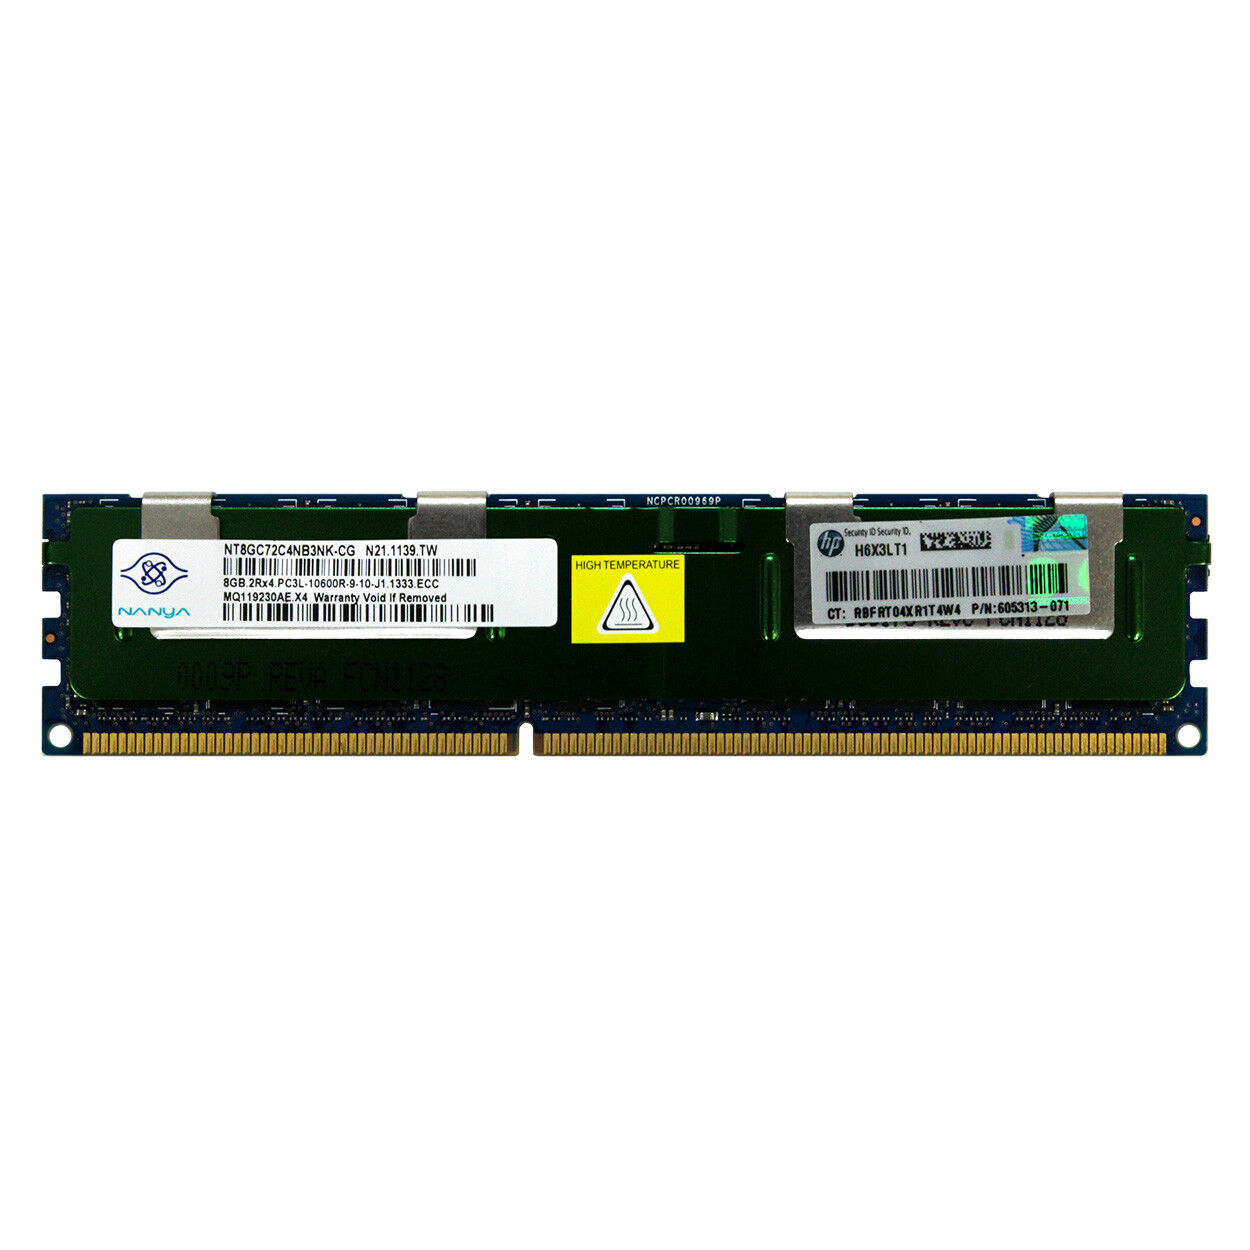 HP 604506-B21 606427-001 605313-071 8GB 2Rx4 PC3L-10600R 1333MHz REG MEMORY RAM